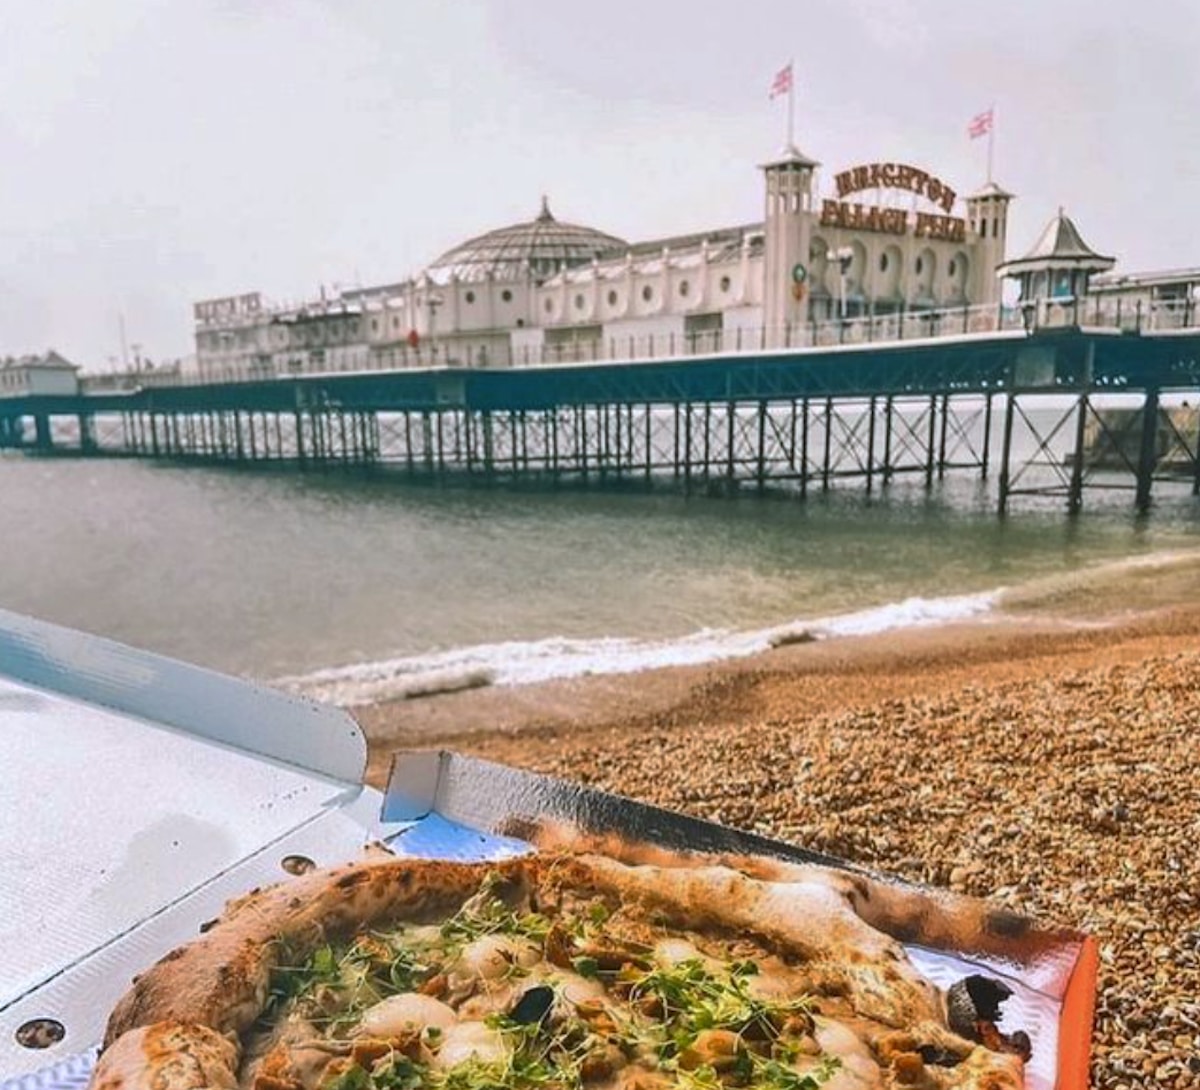 A vegan pizza from the restaurant Purezza in Brighton, UK.